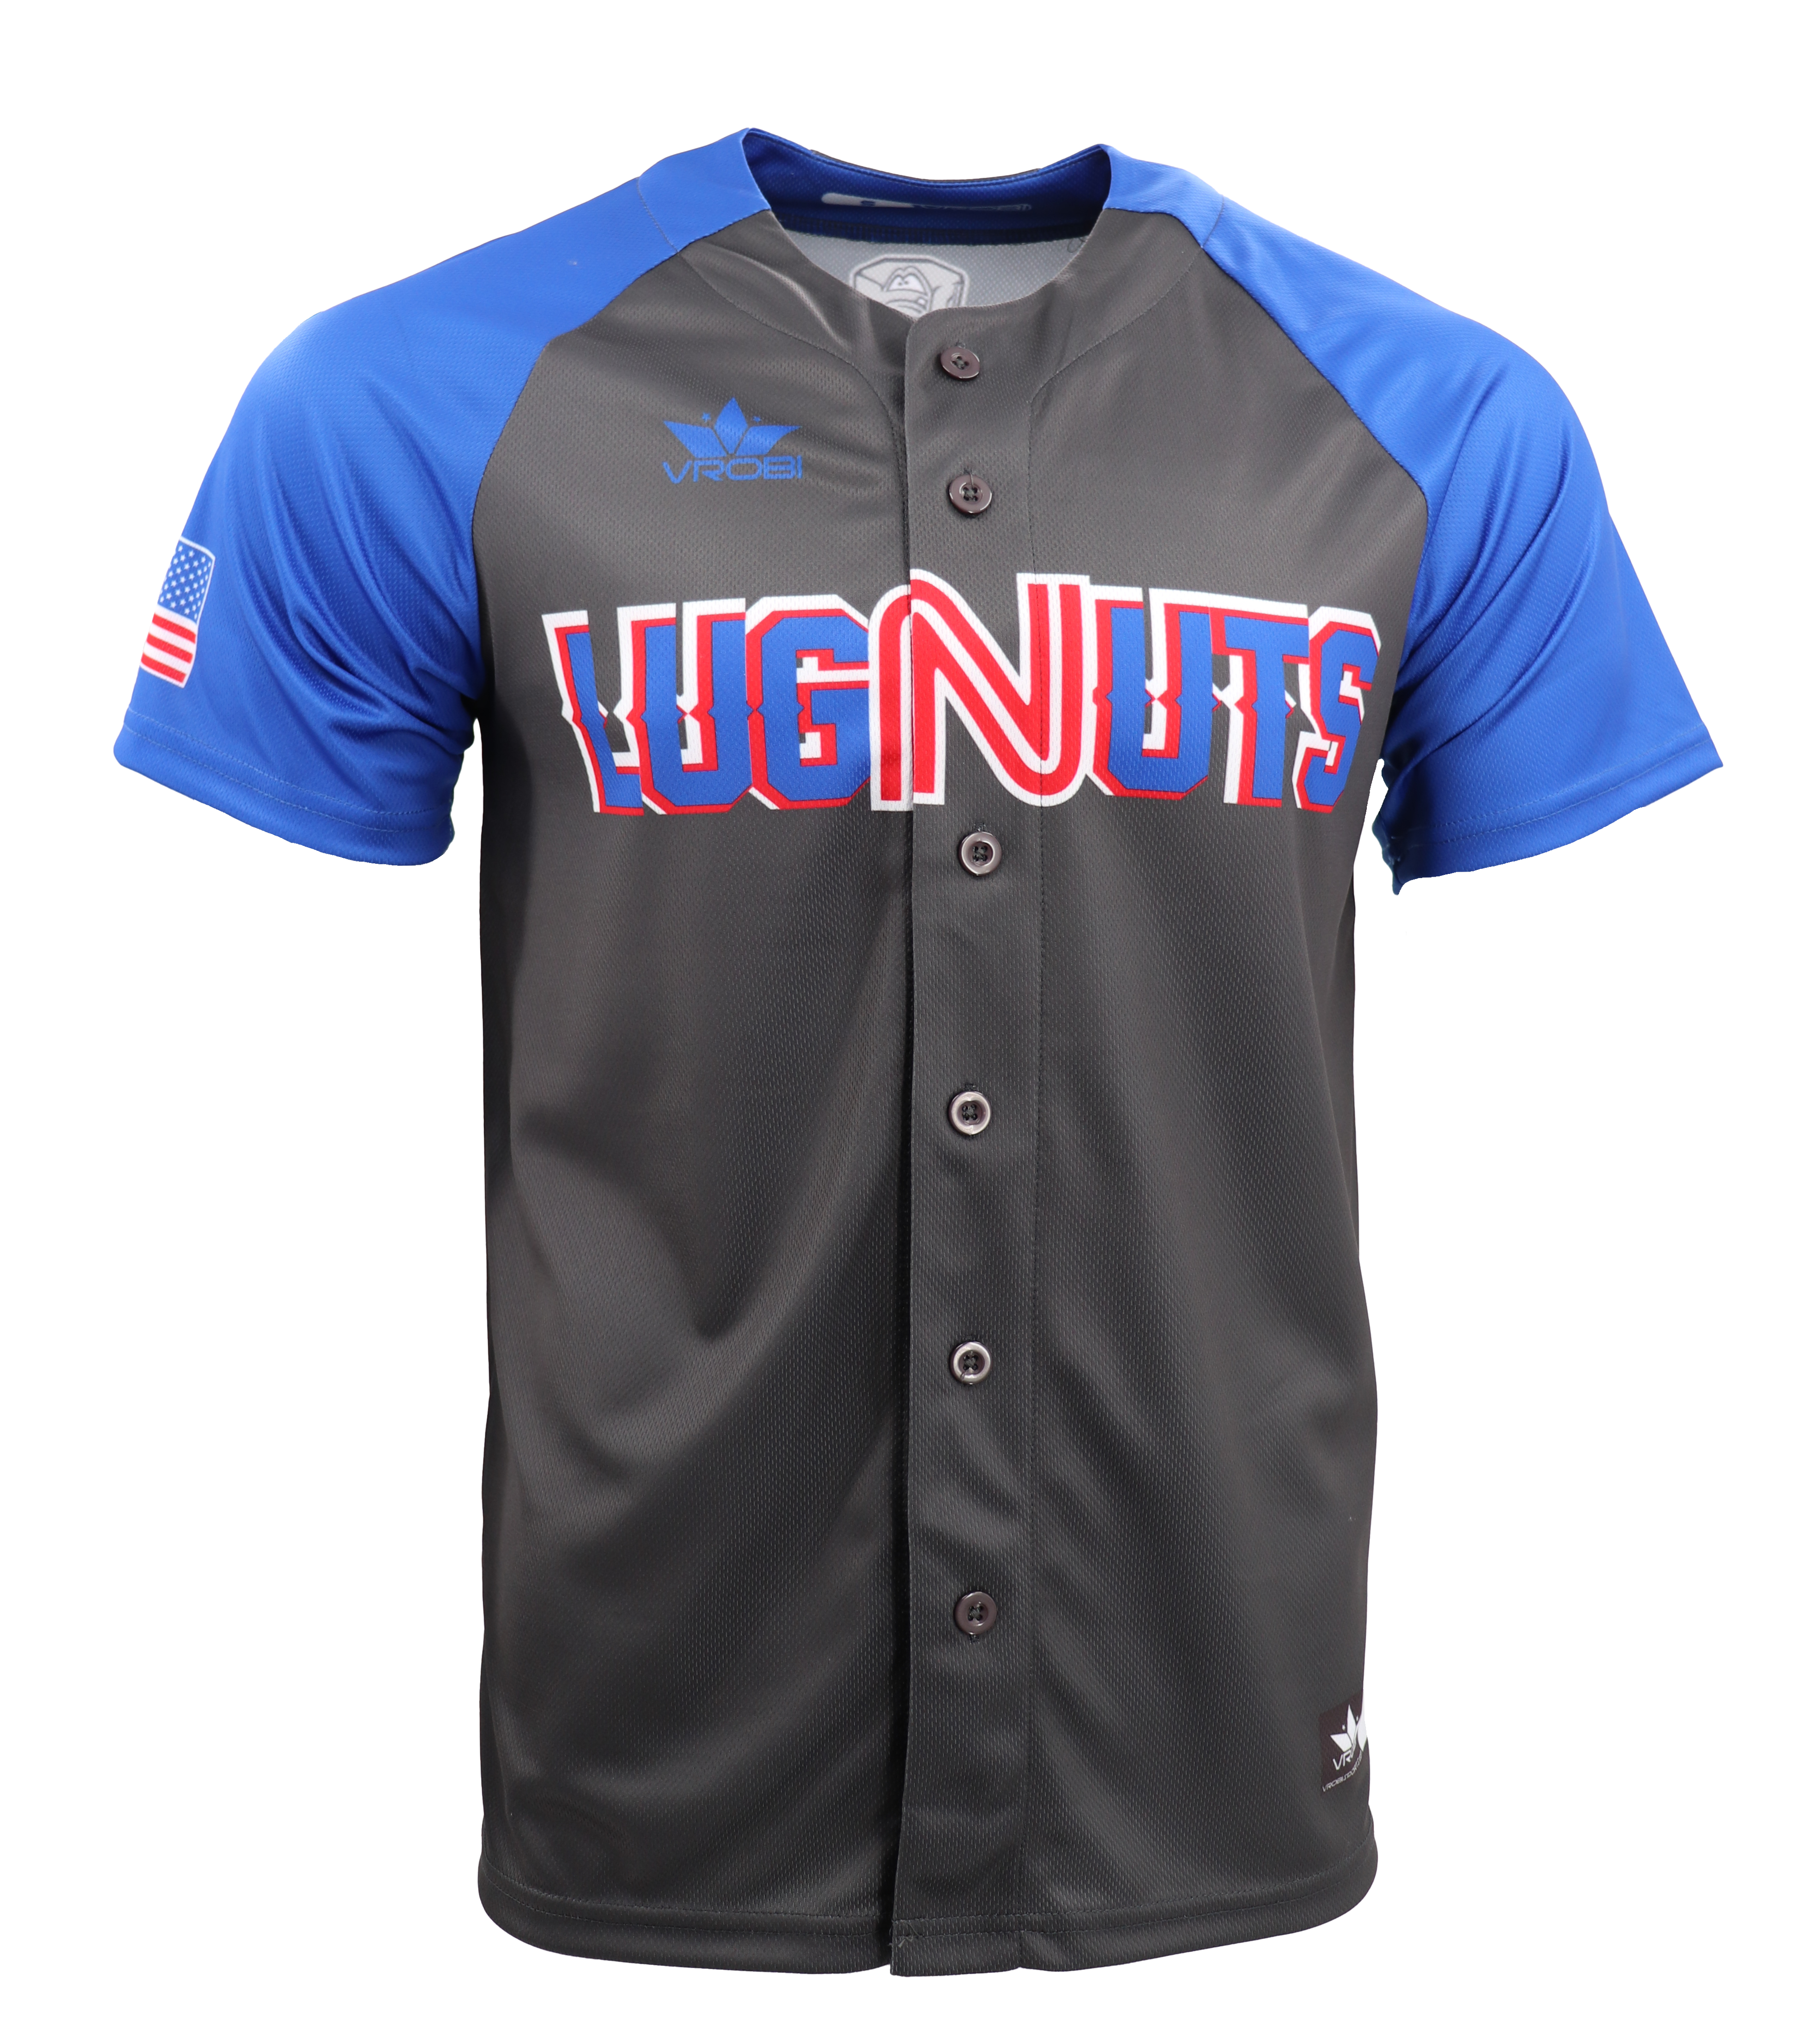 custom baseball jersey usa - full-dye custom baseball uniform